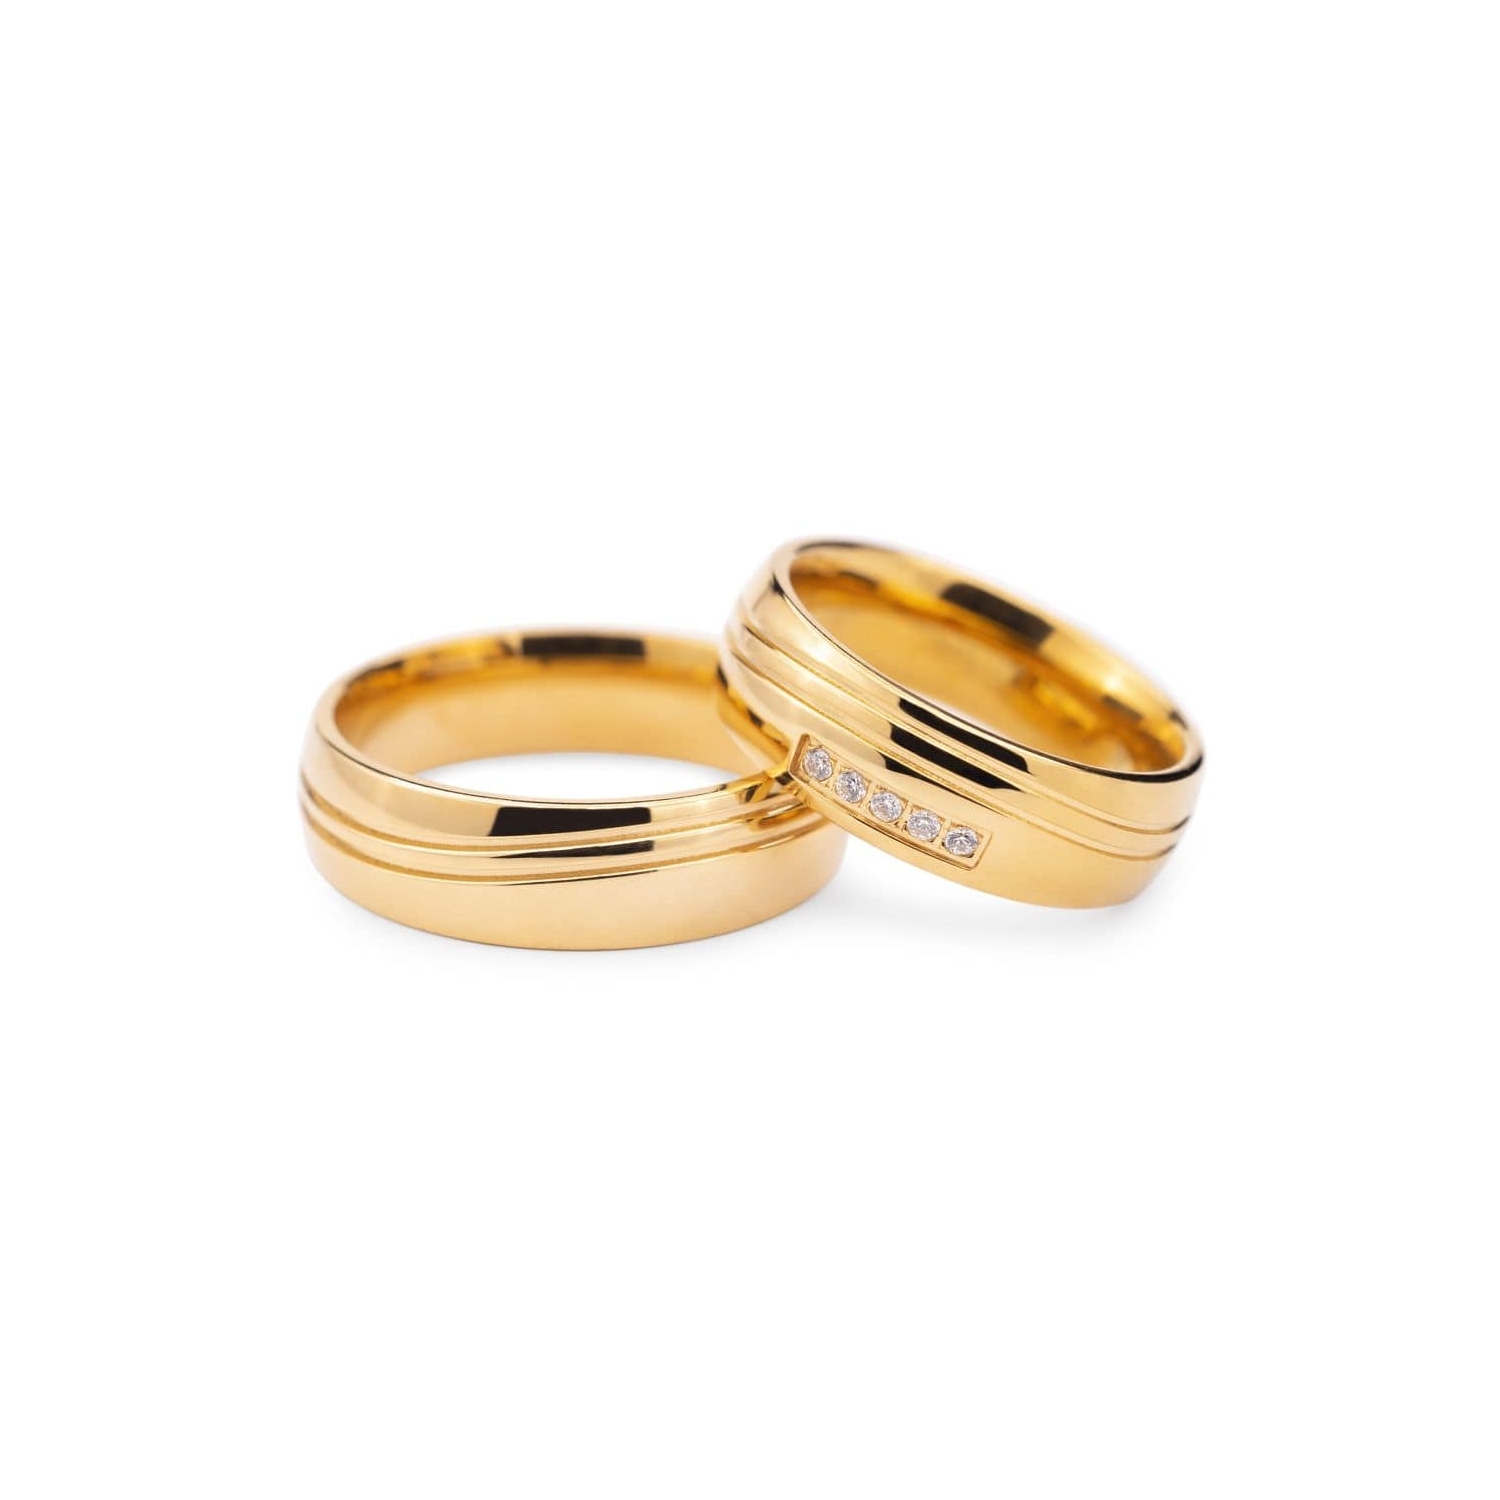 Golden wedding rings with diamonds "VKA 128"